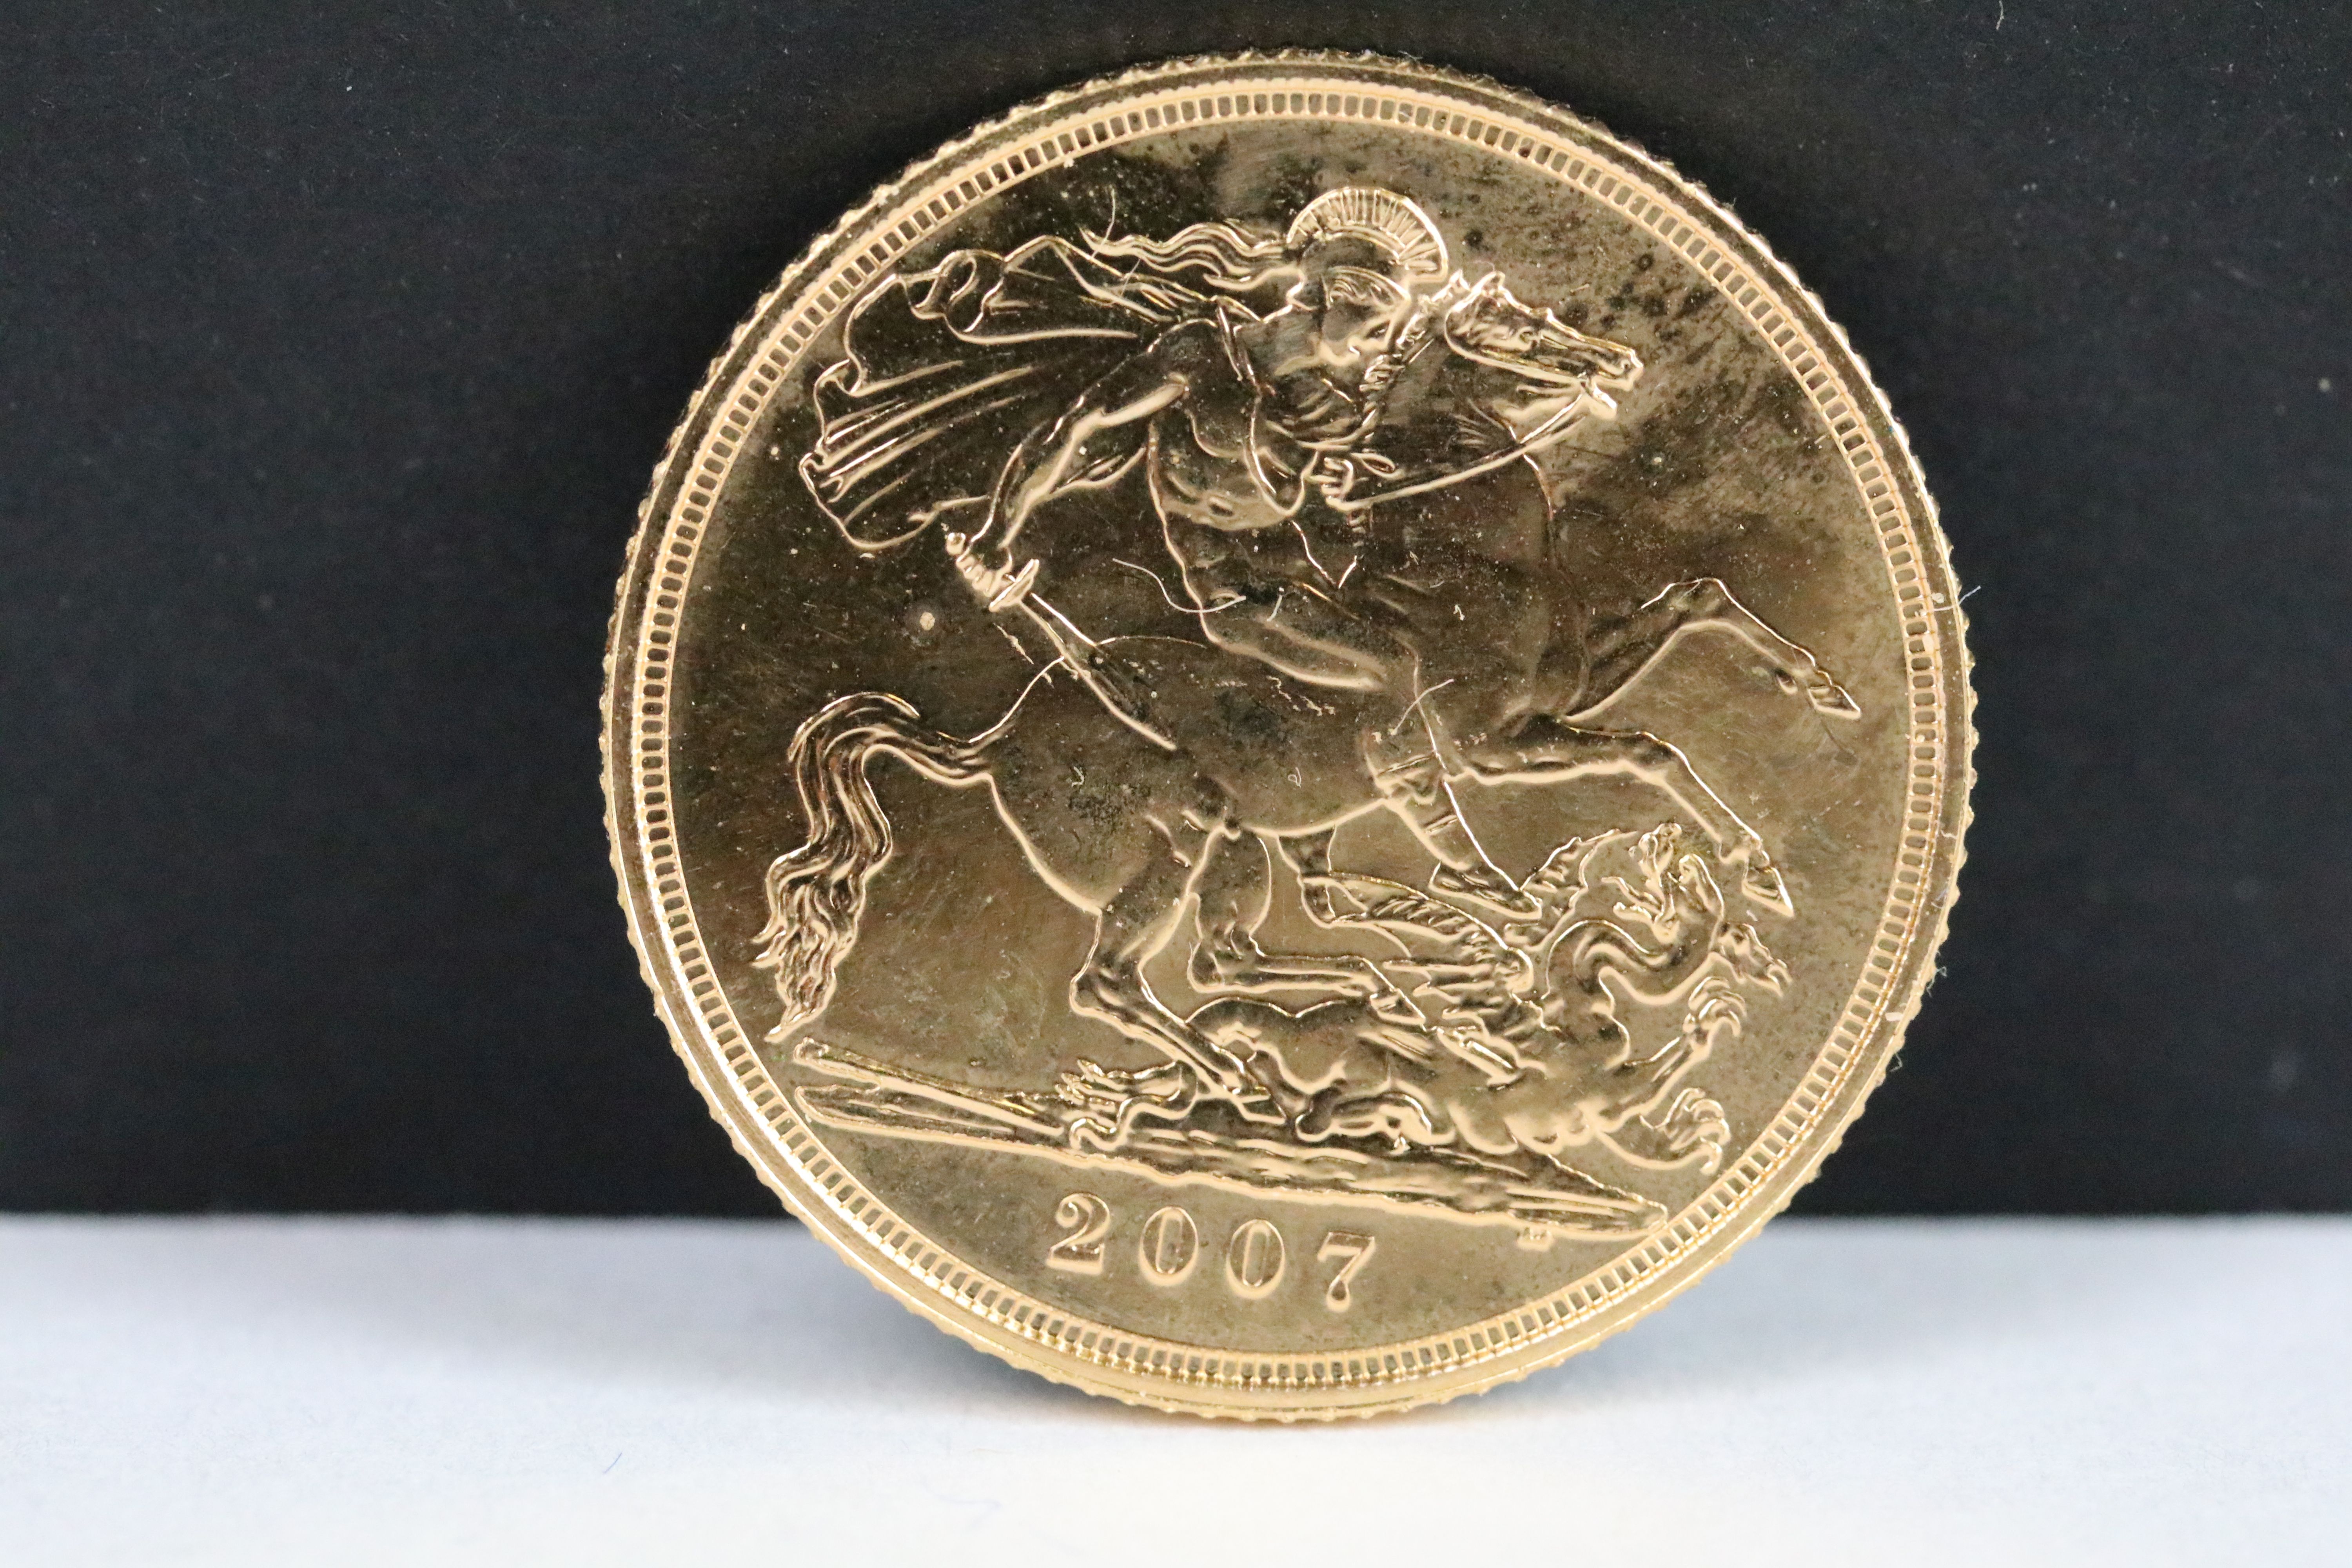 A British Queen Elizabeth II 2007 gold full sovereign coin.